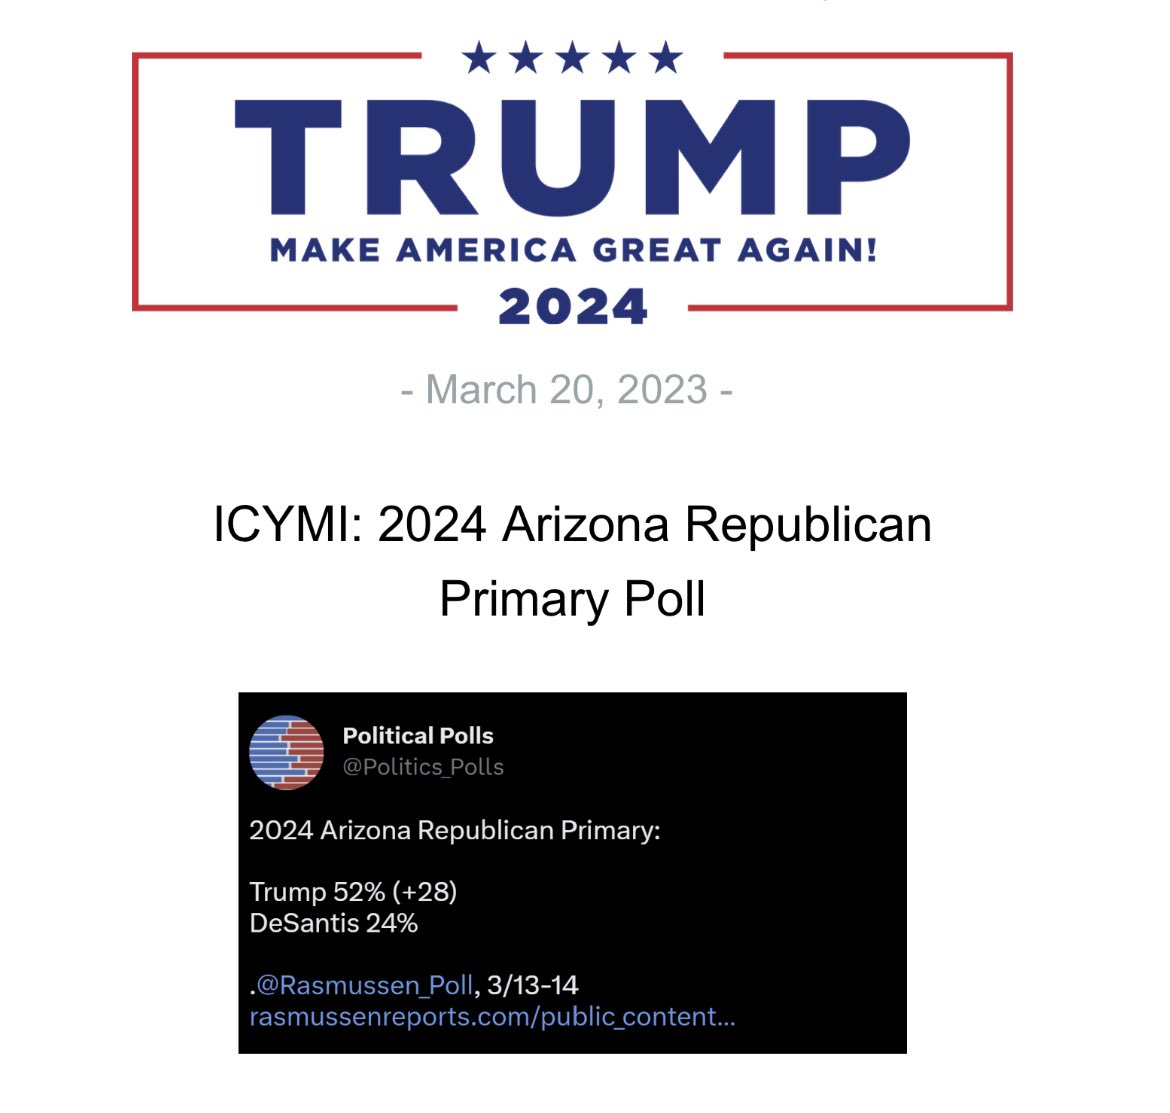 Liz Harrington on Twitter "ICYMI 2024 Arizona Republican Primary Poll"